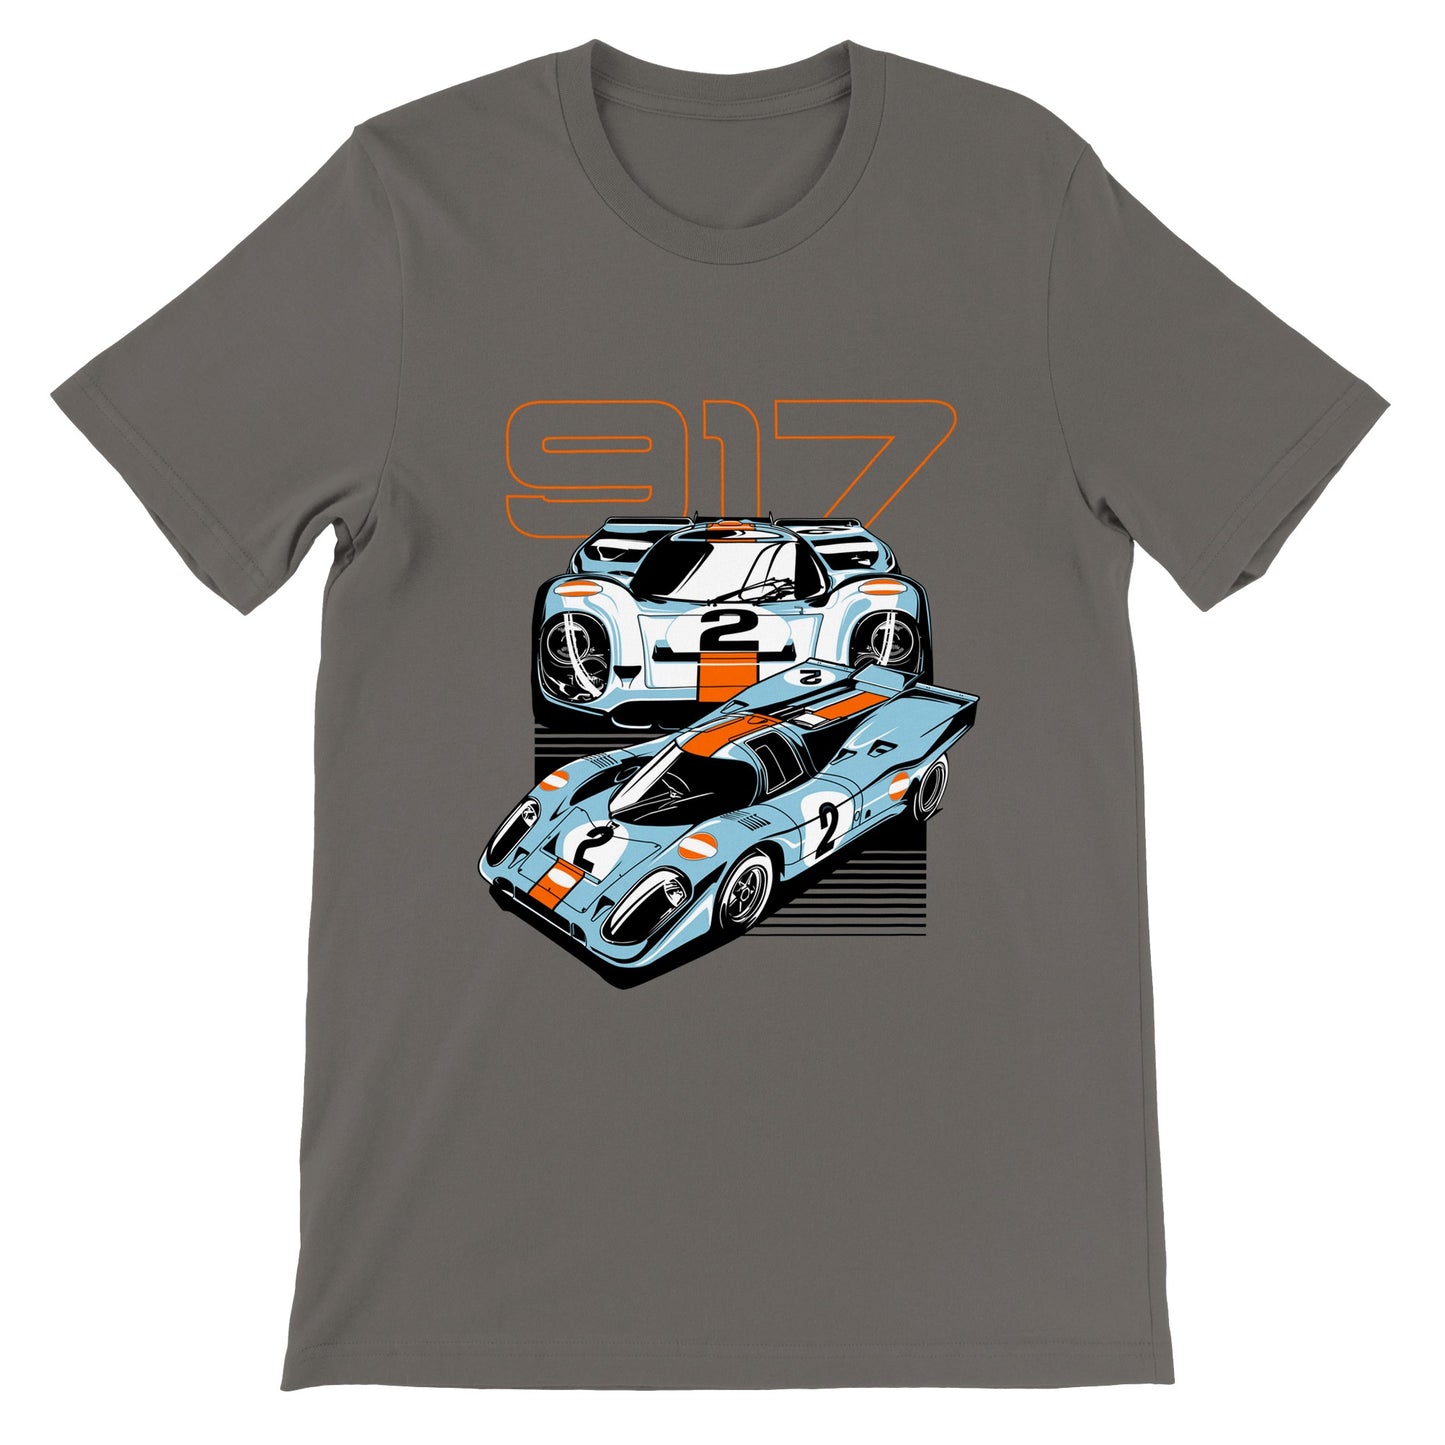 Car T-shirt - The Super Car 917 - Artwork - Premium Unisex T-shirt